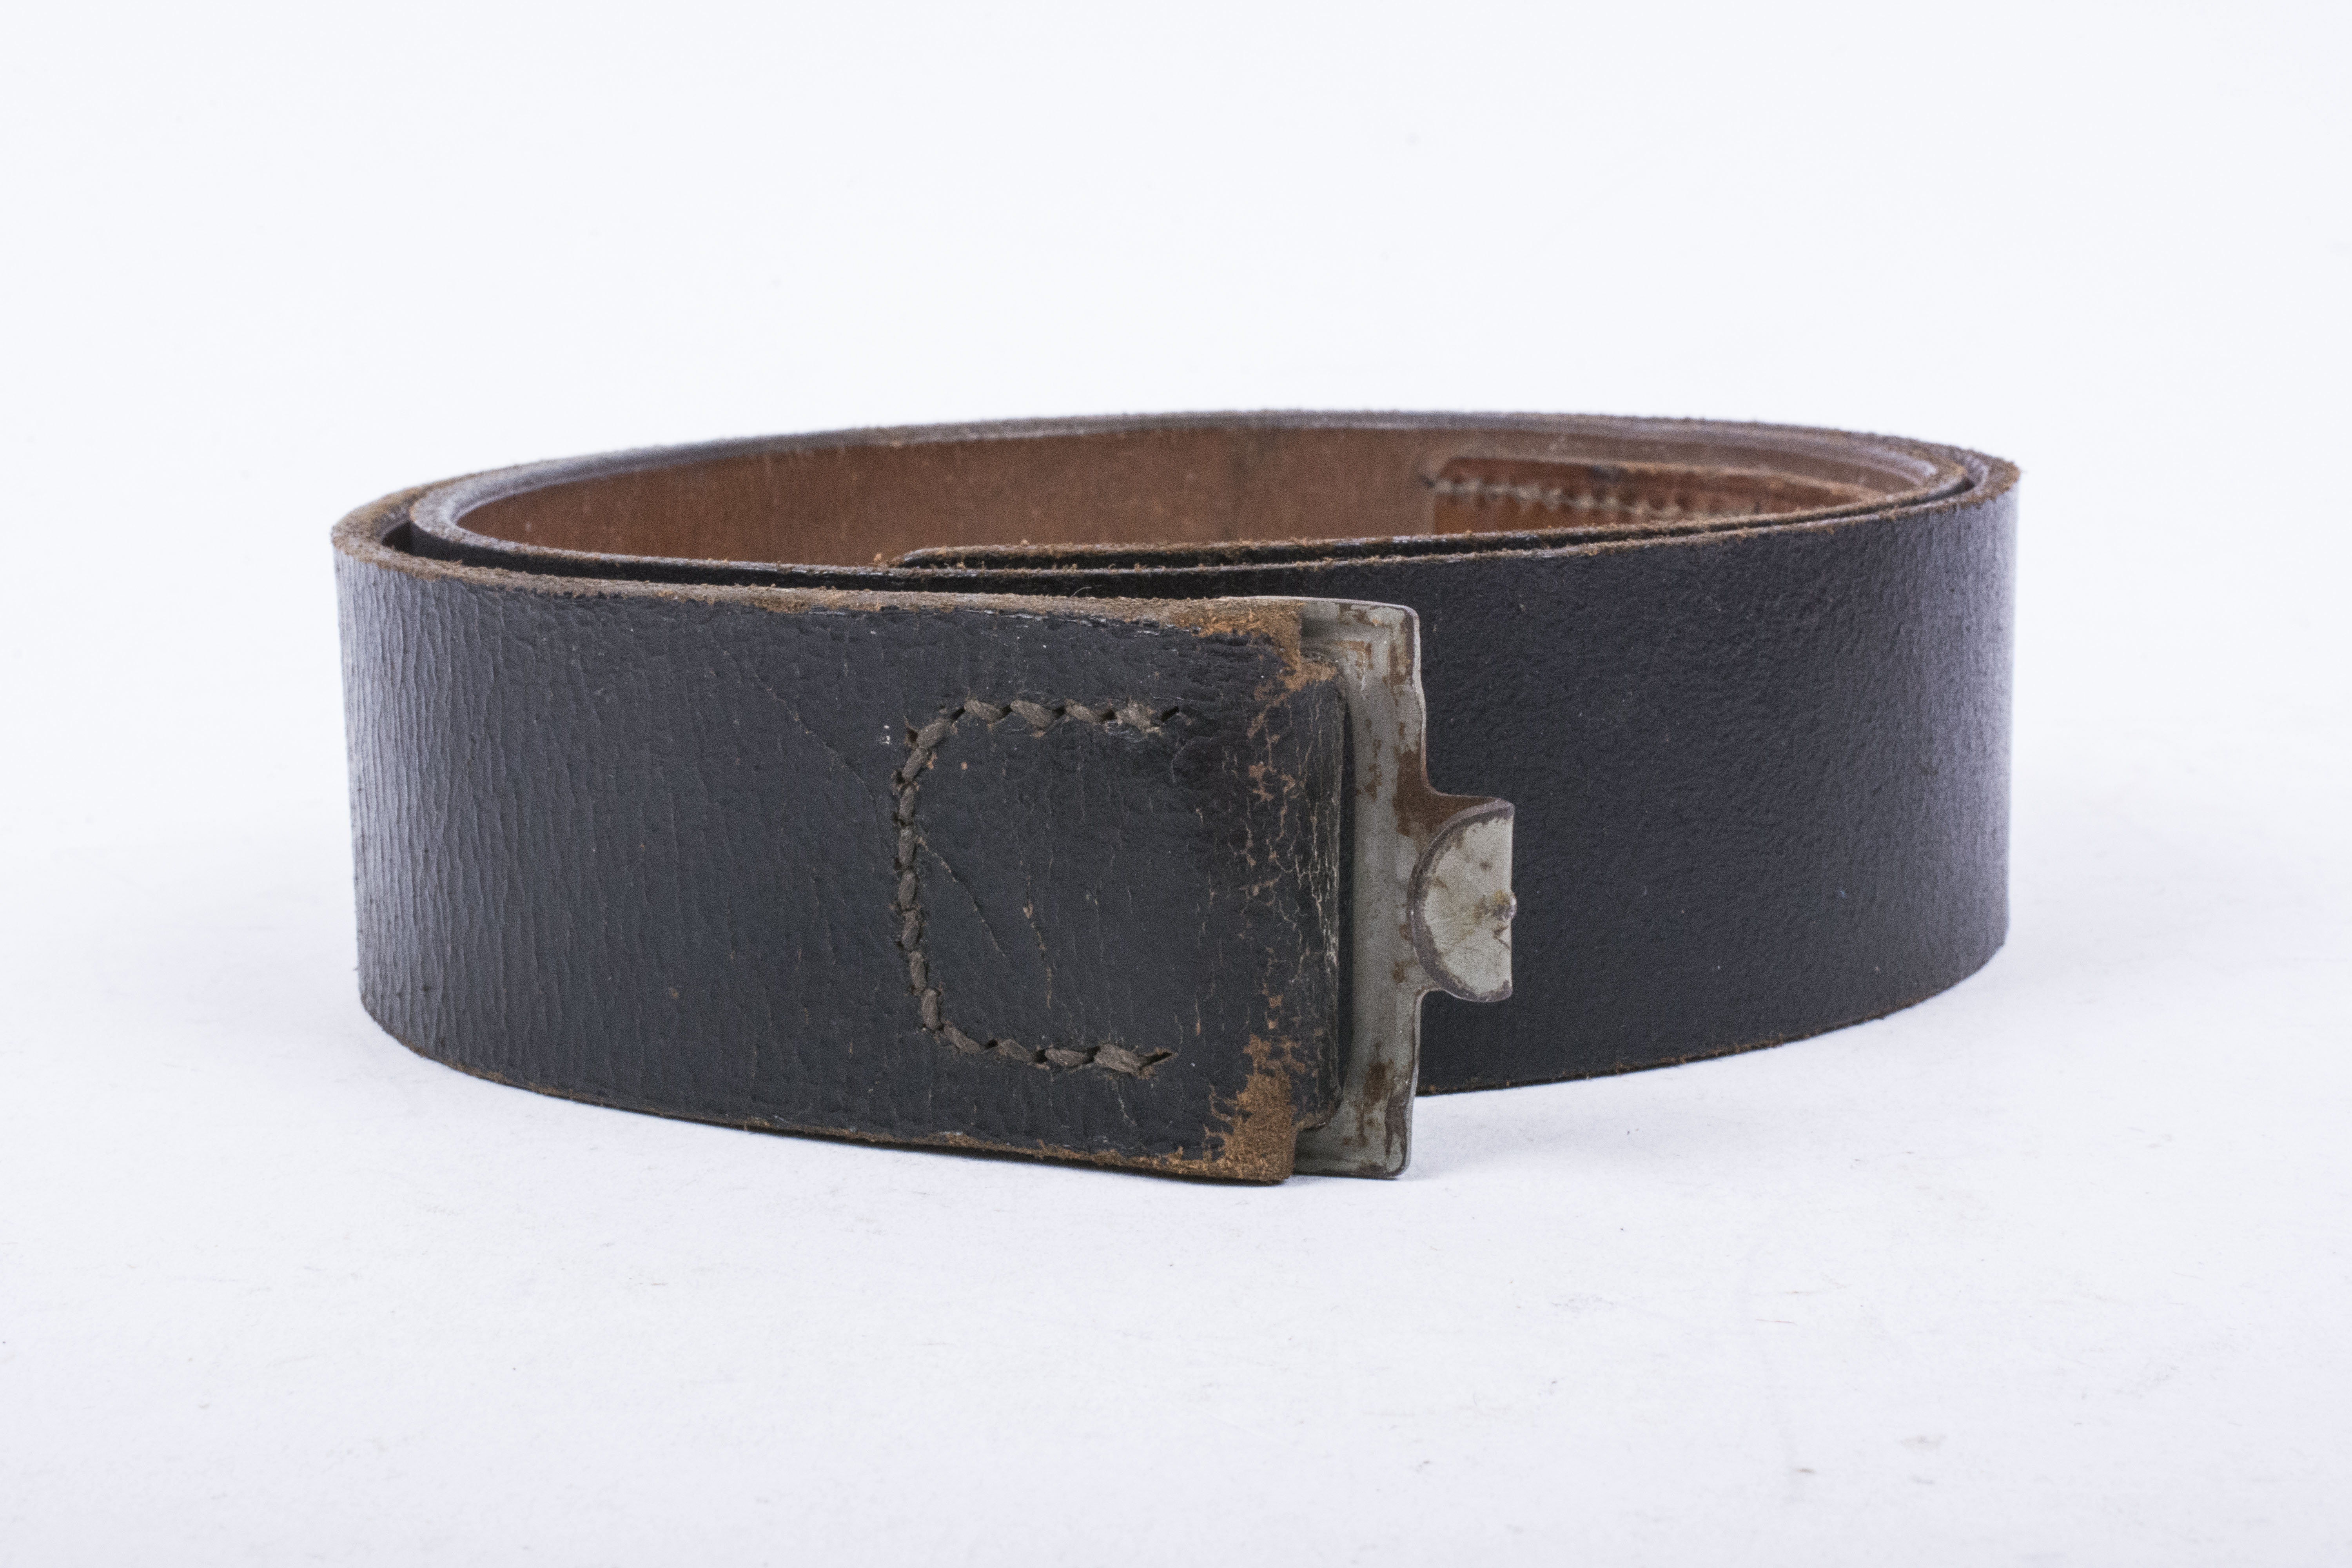 Equipment belt marked Theodor Seibold Offenbach A.M. 1941 – fjm44